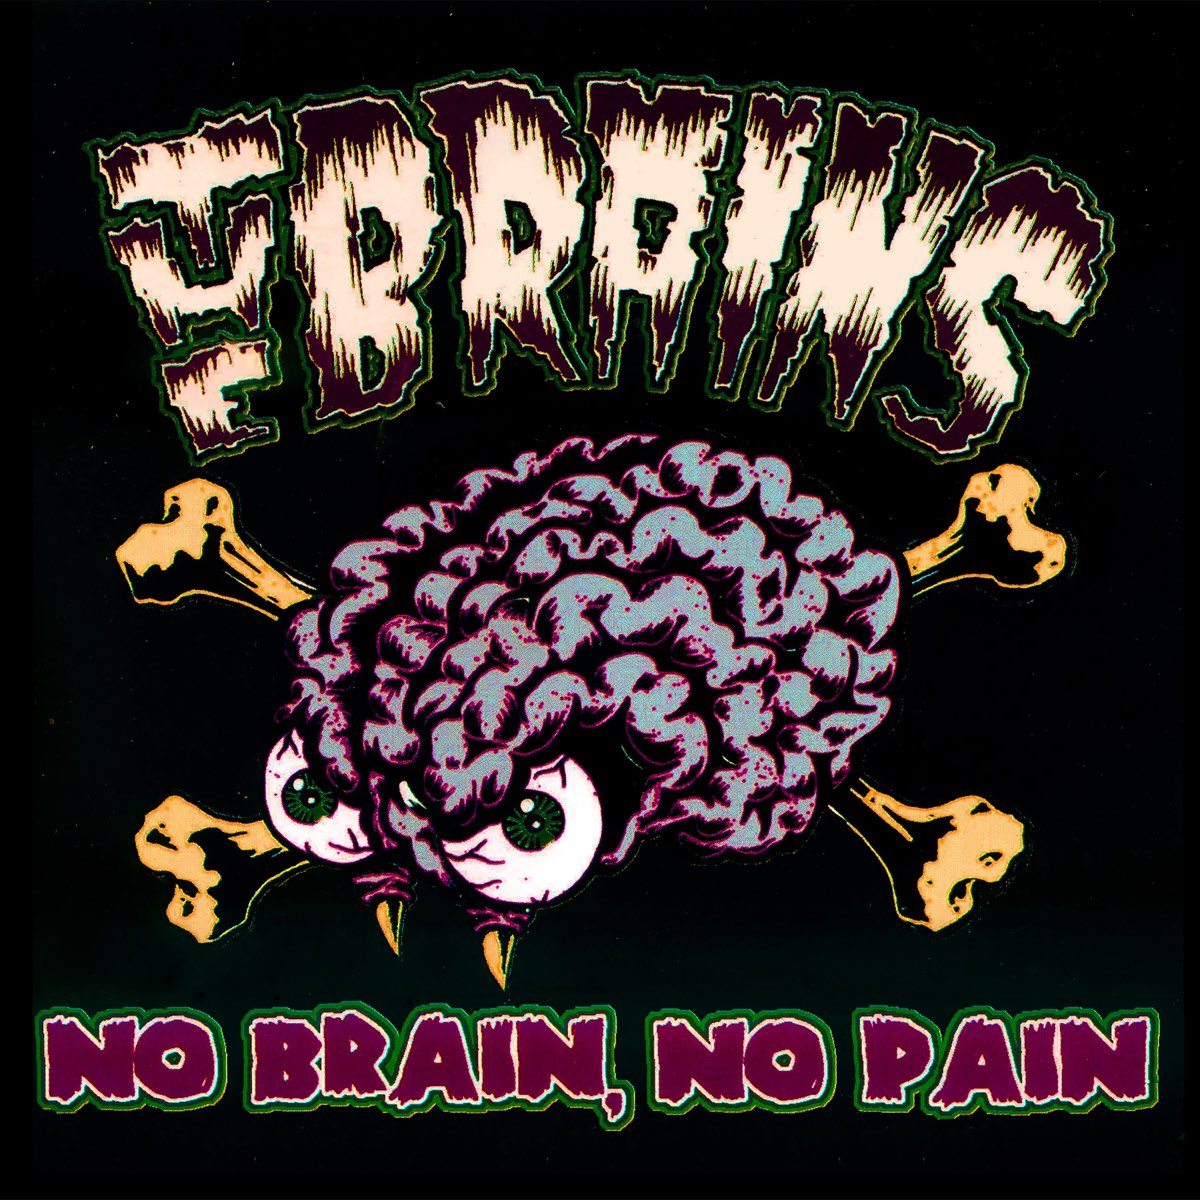 Brain слушать. The Brains группа. Группа no Brain. The Brains Psychobilly. Альбом no Brain no Pain.